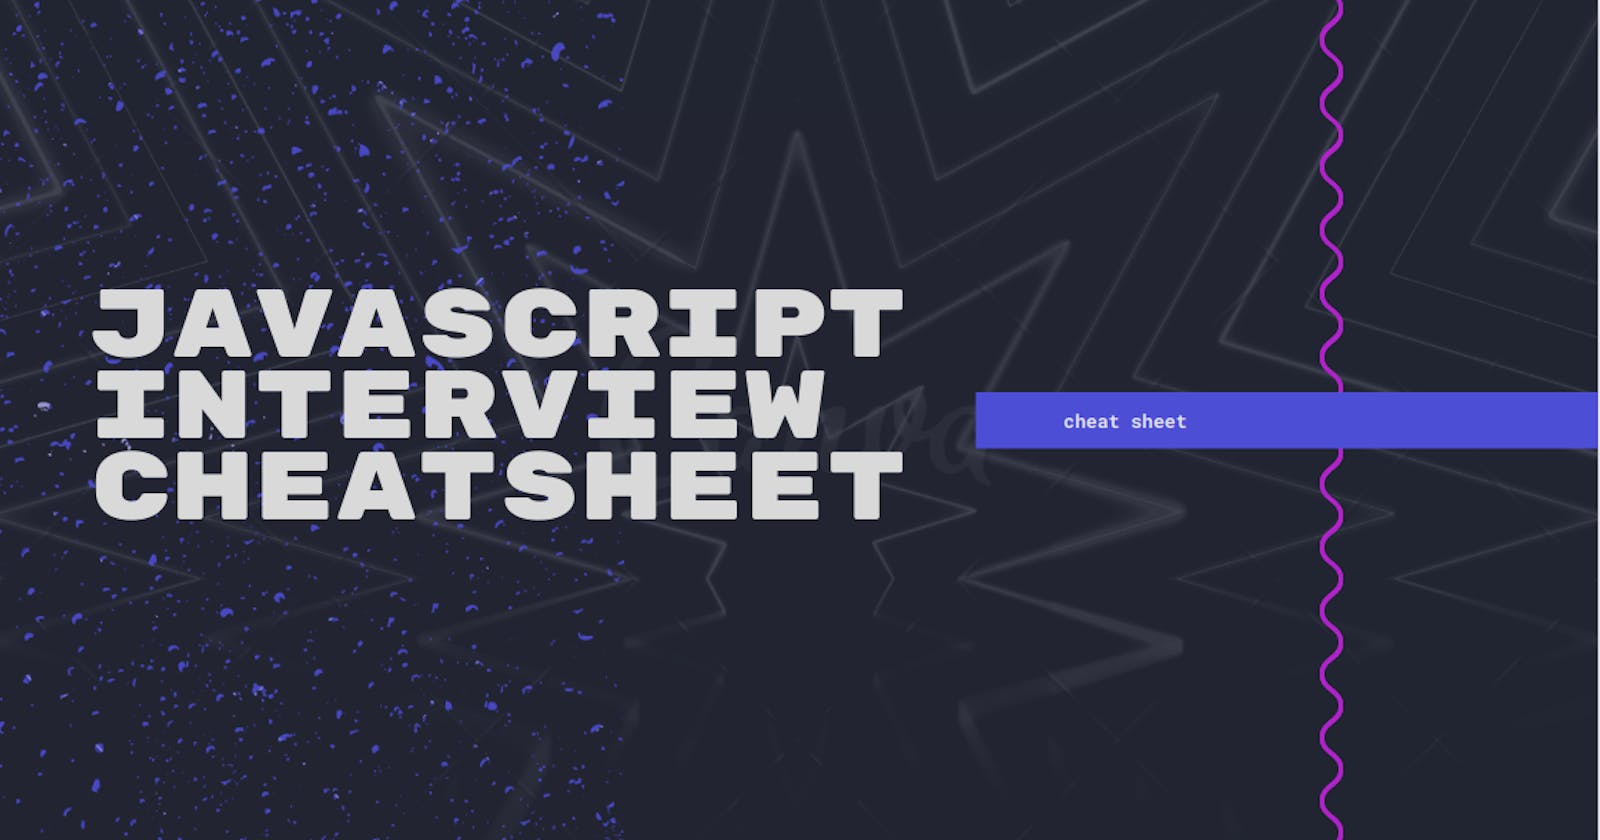 JavaScript Interview cheat sheet